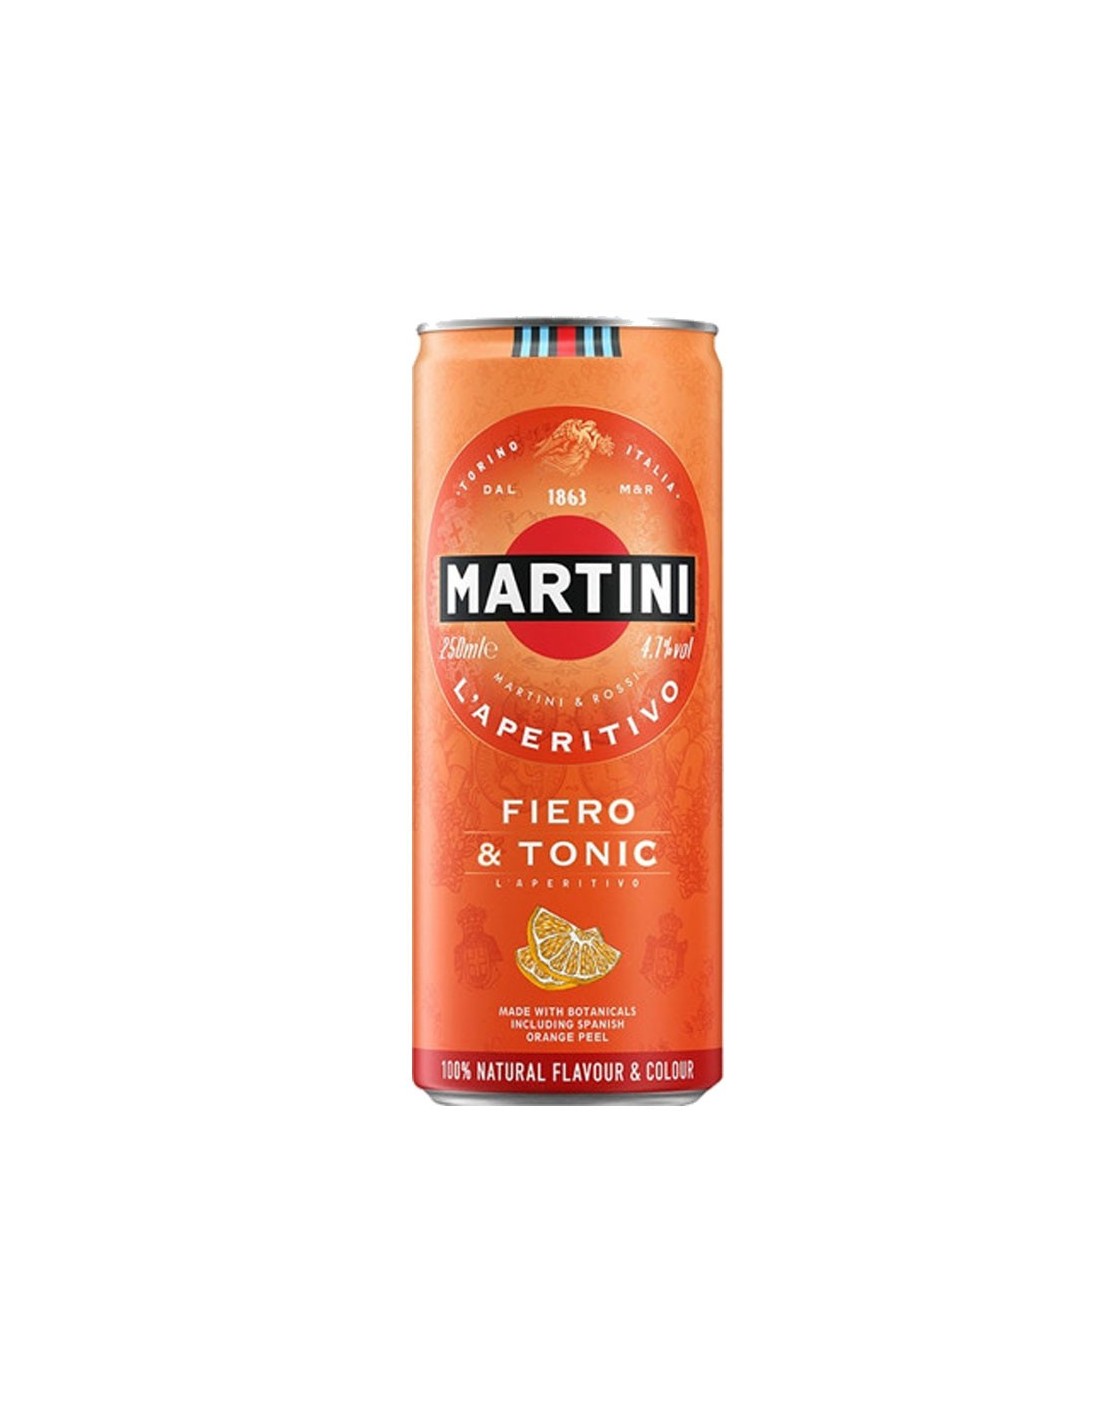 Martini Fiero & Tonic 25cl